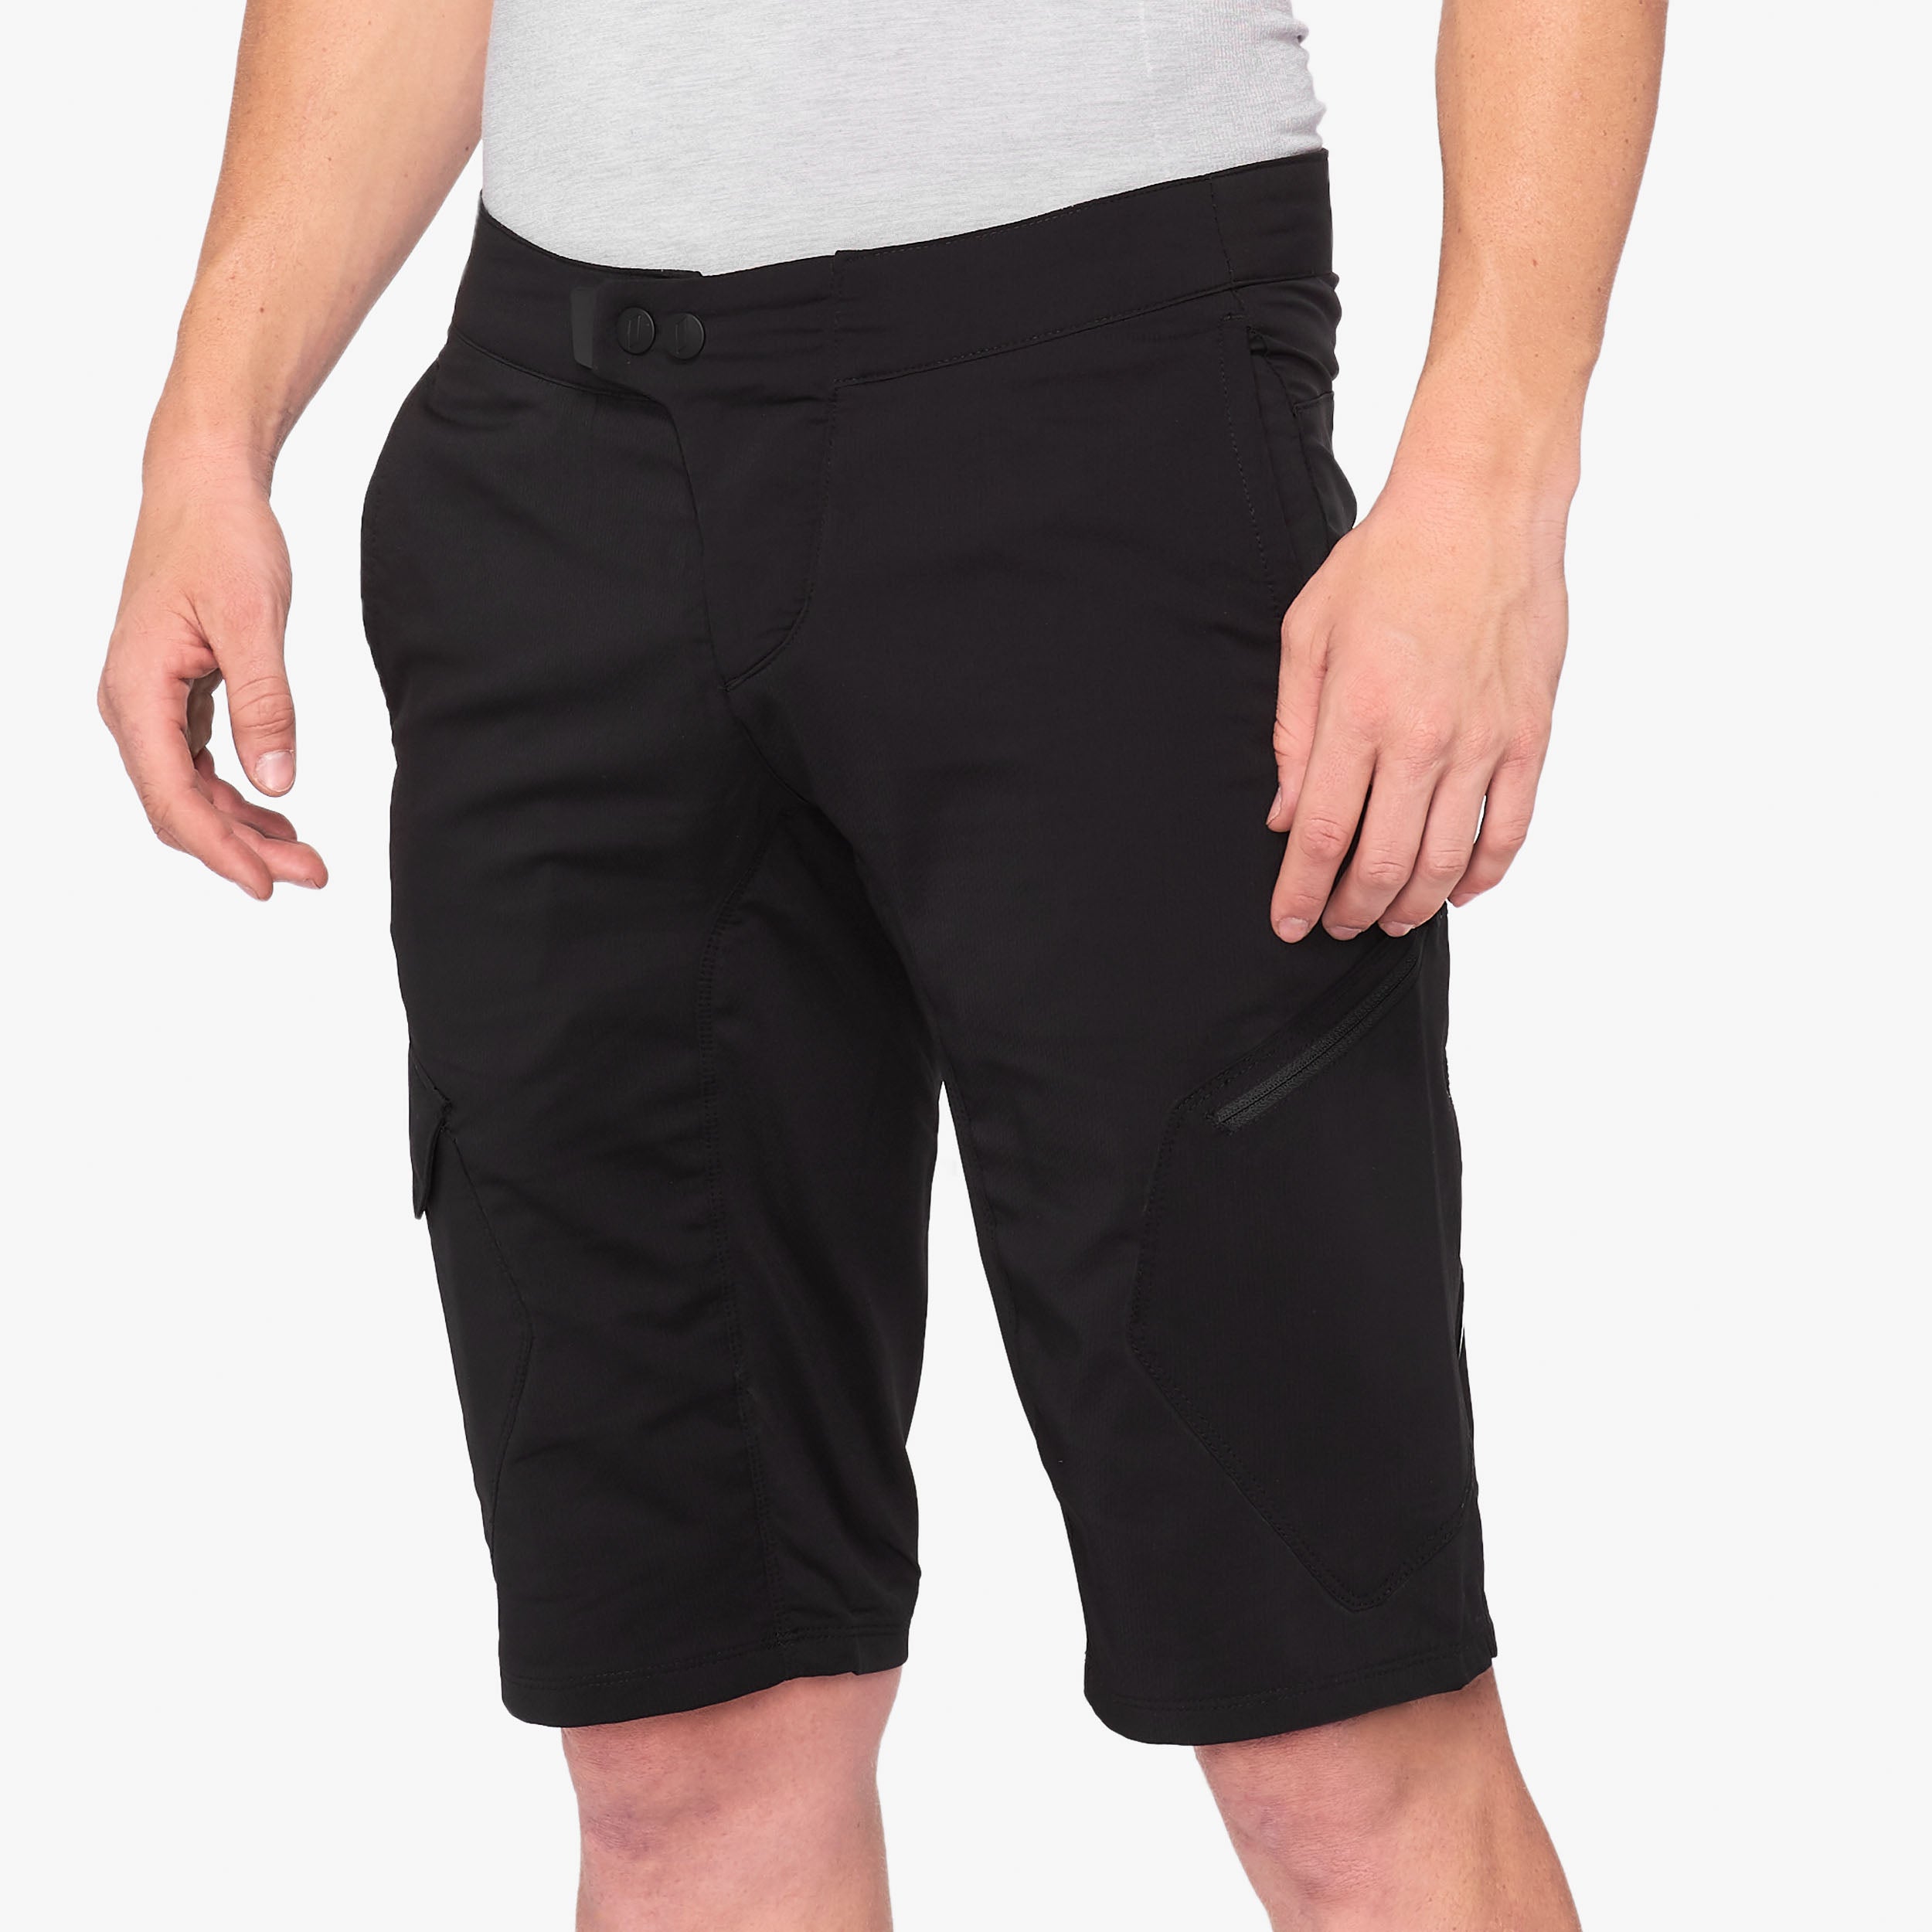 RIDECAMP Shorts - Black